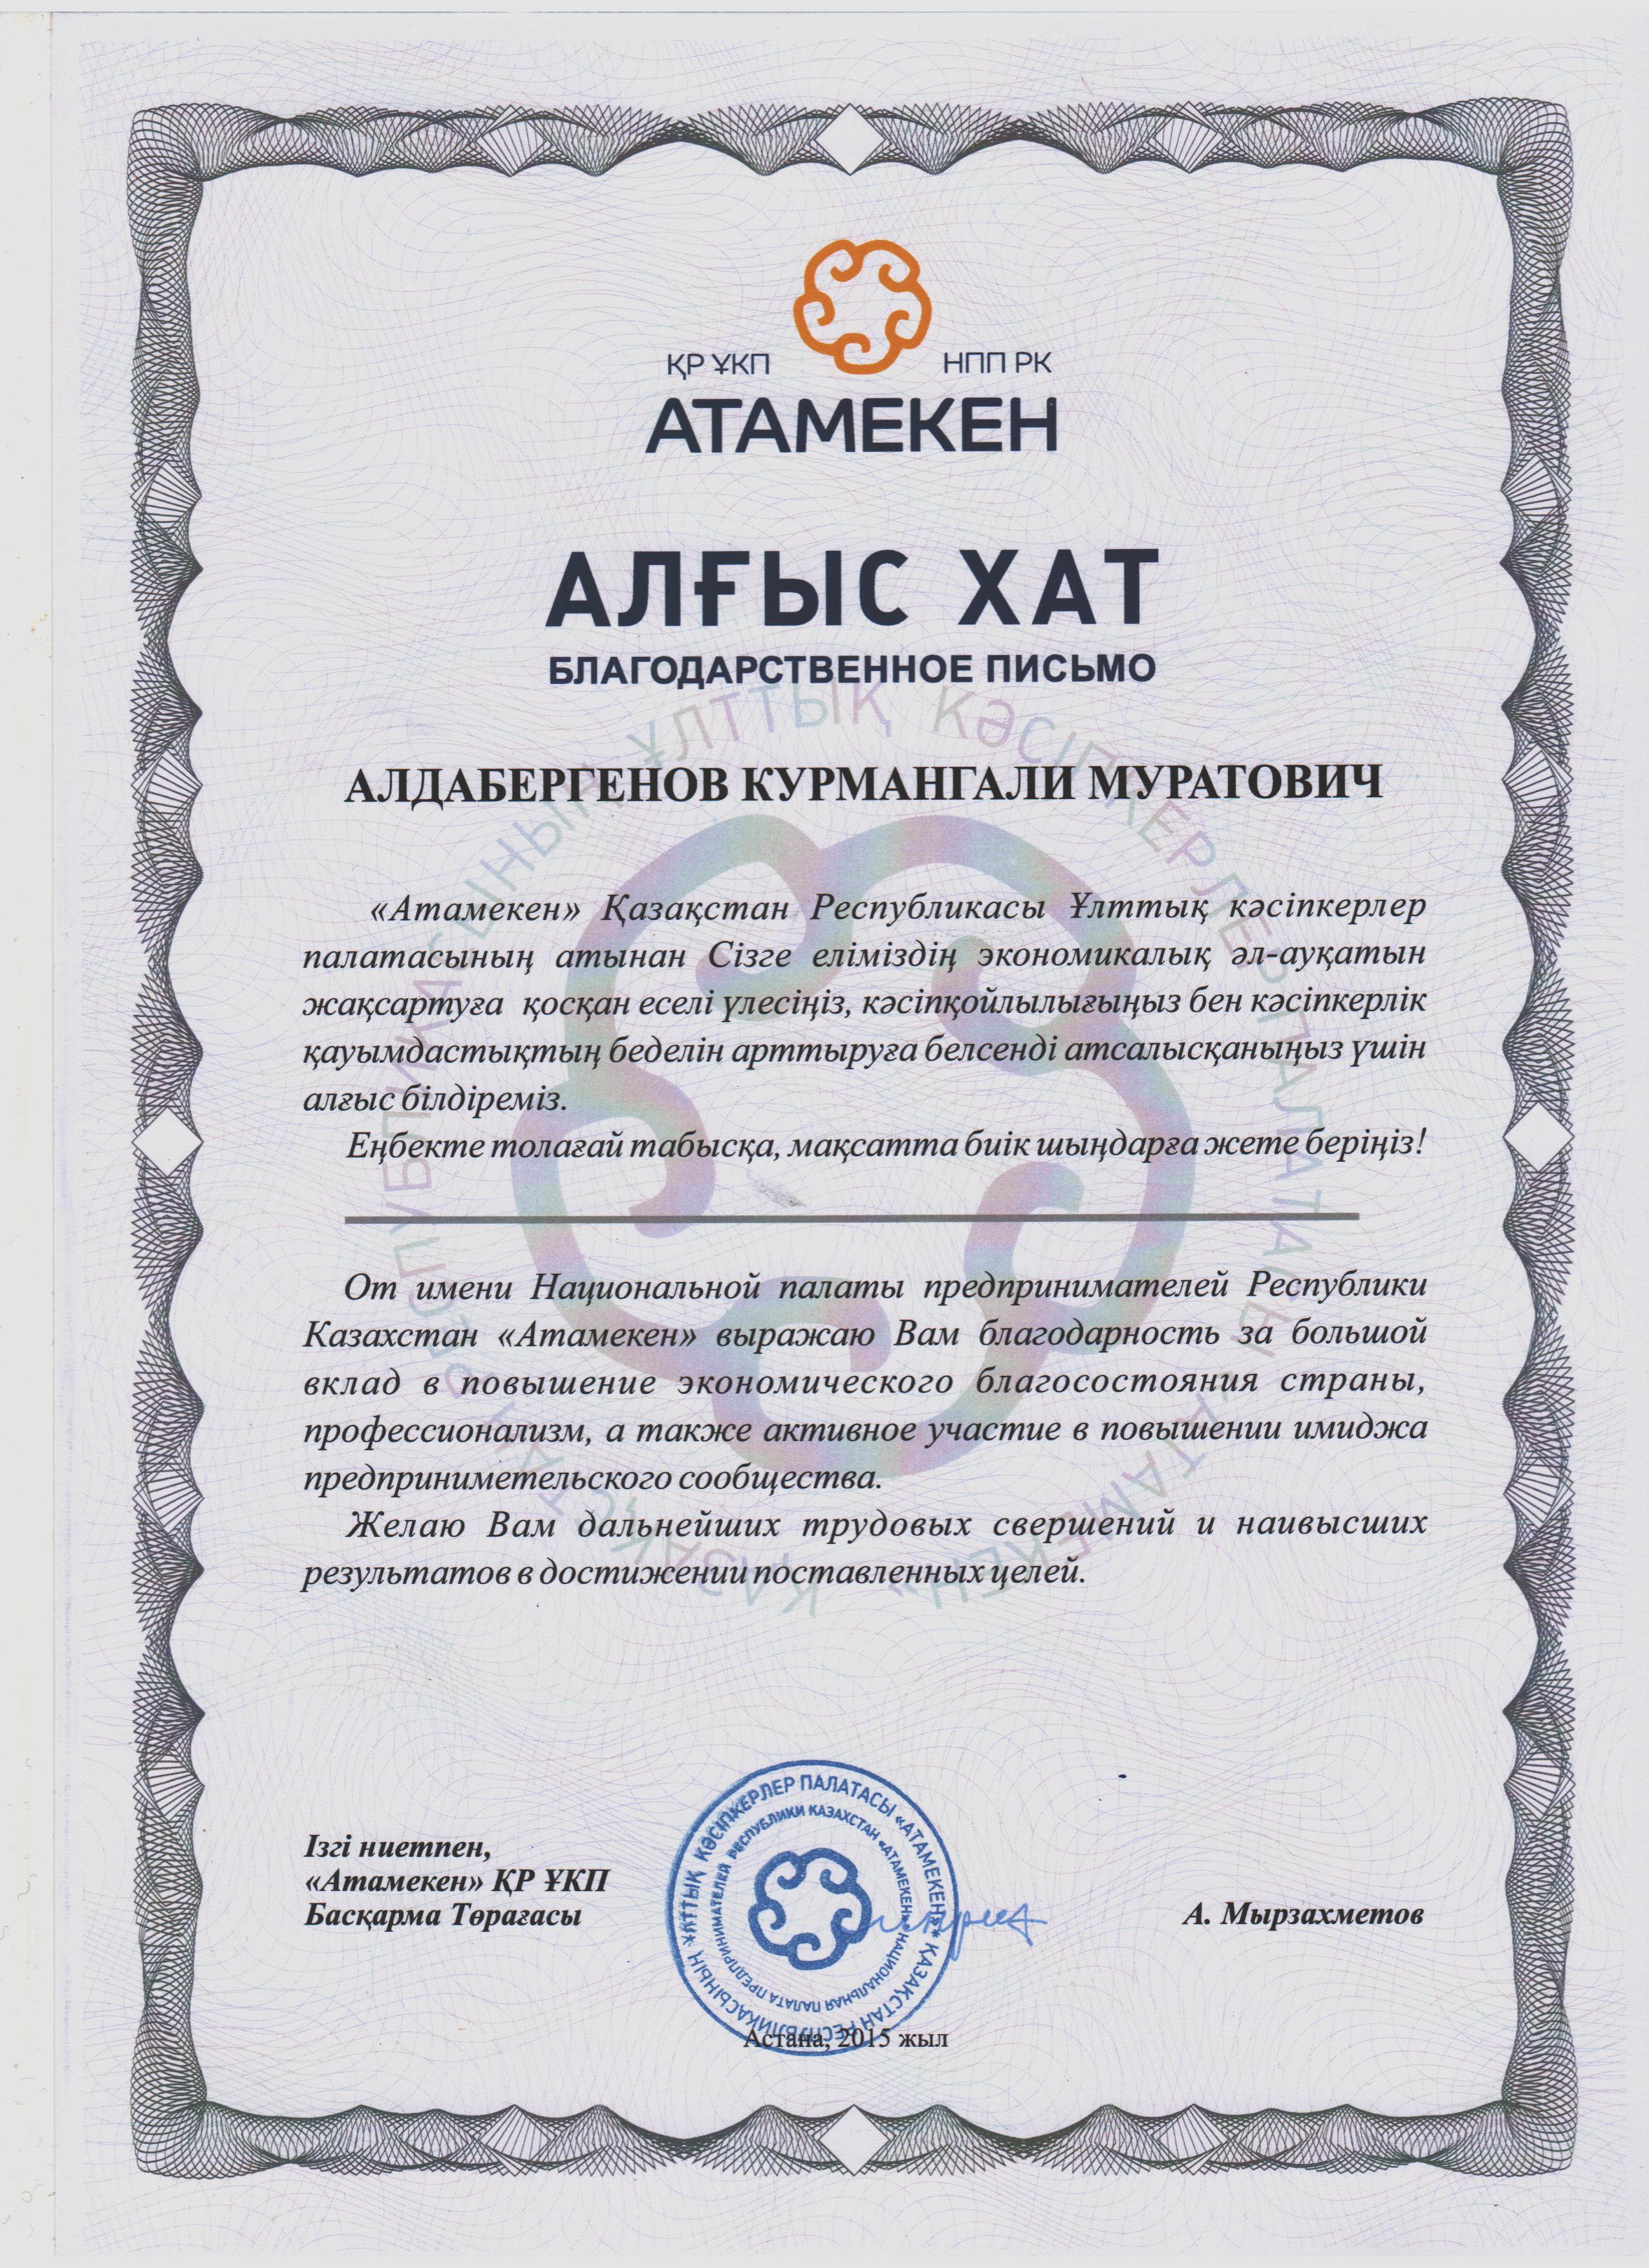 Letter of appreciation from “Atameken” National Chamber of Entrepreneurs of the Republic of Kazakhstan